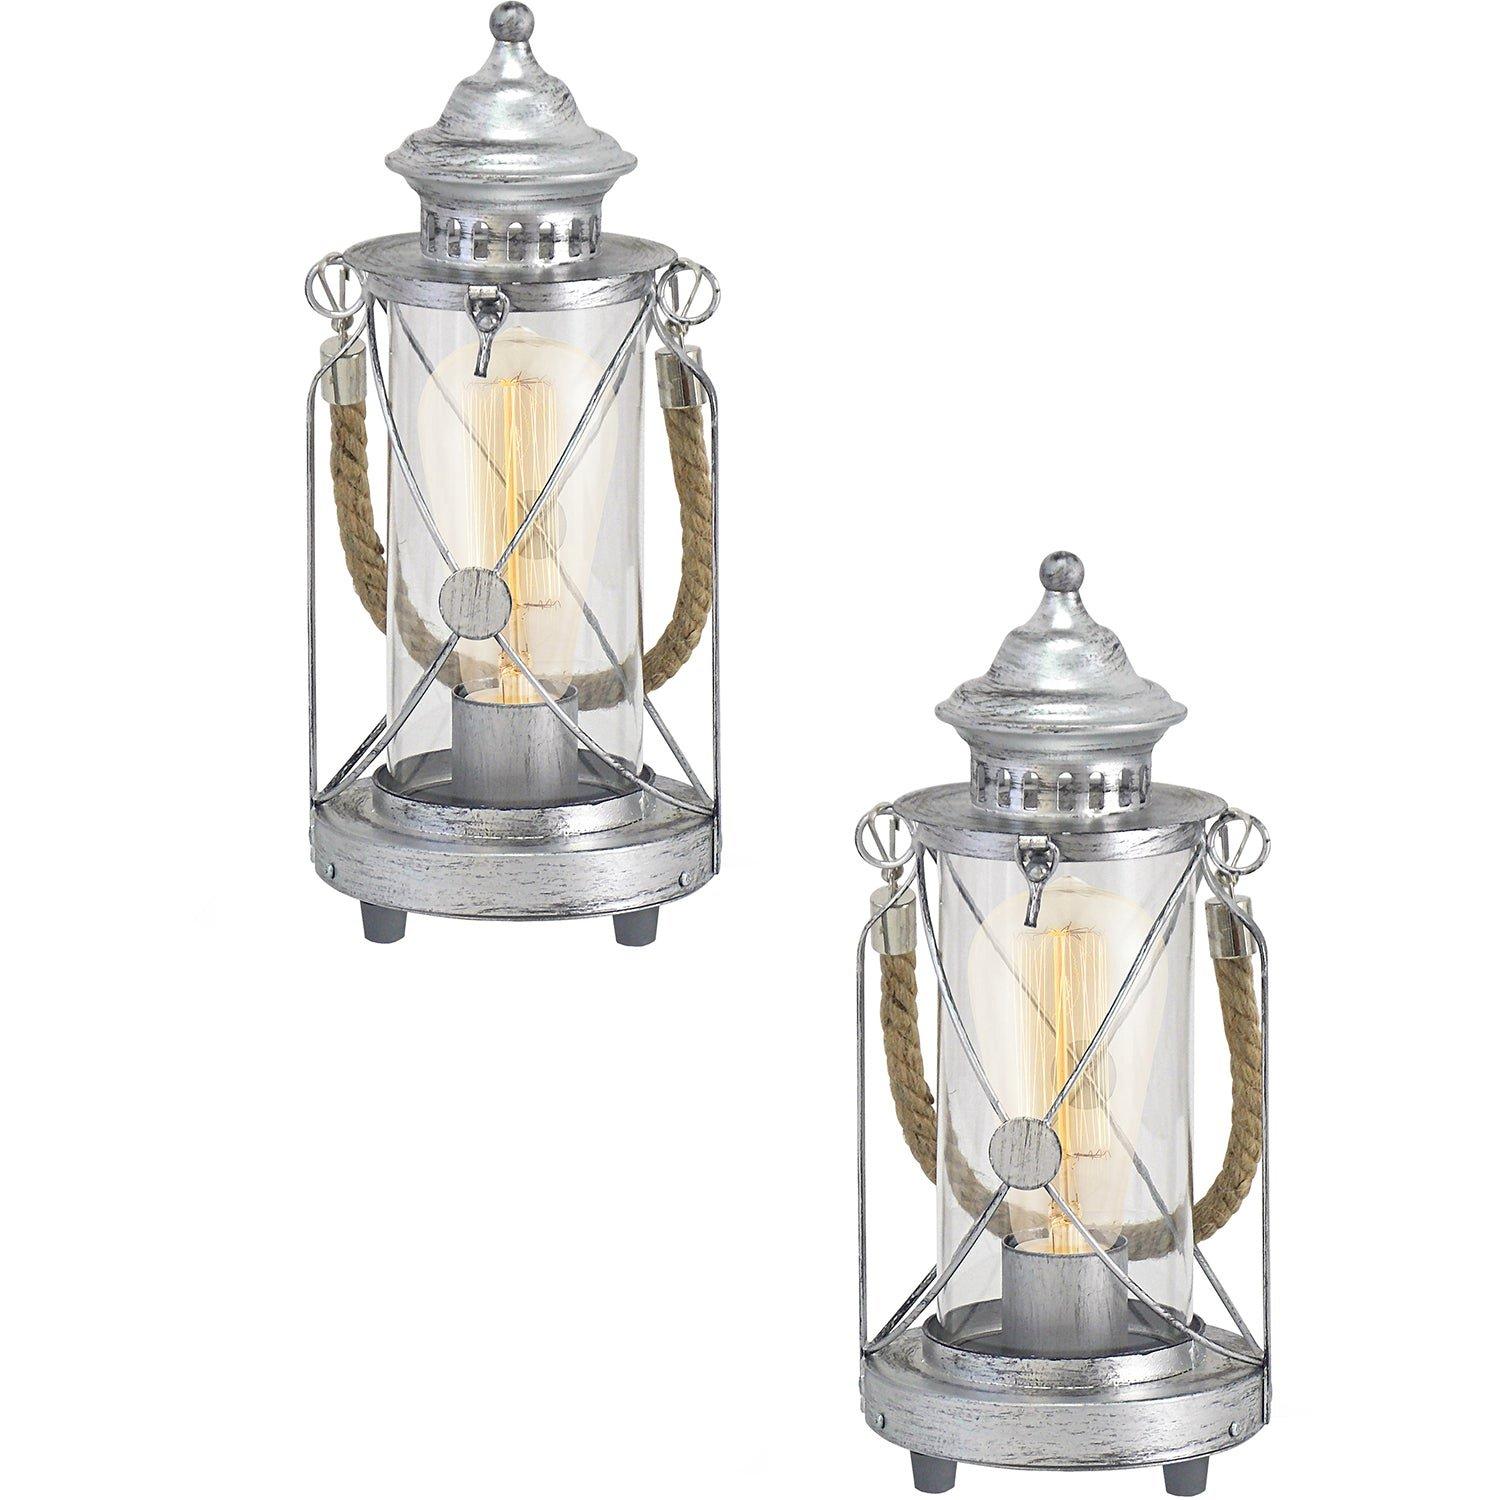 2 PACK Table Lamp Desk Light Antique Silver & Glass Lantern Shade 1x 60W E27